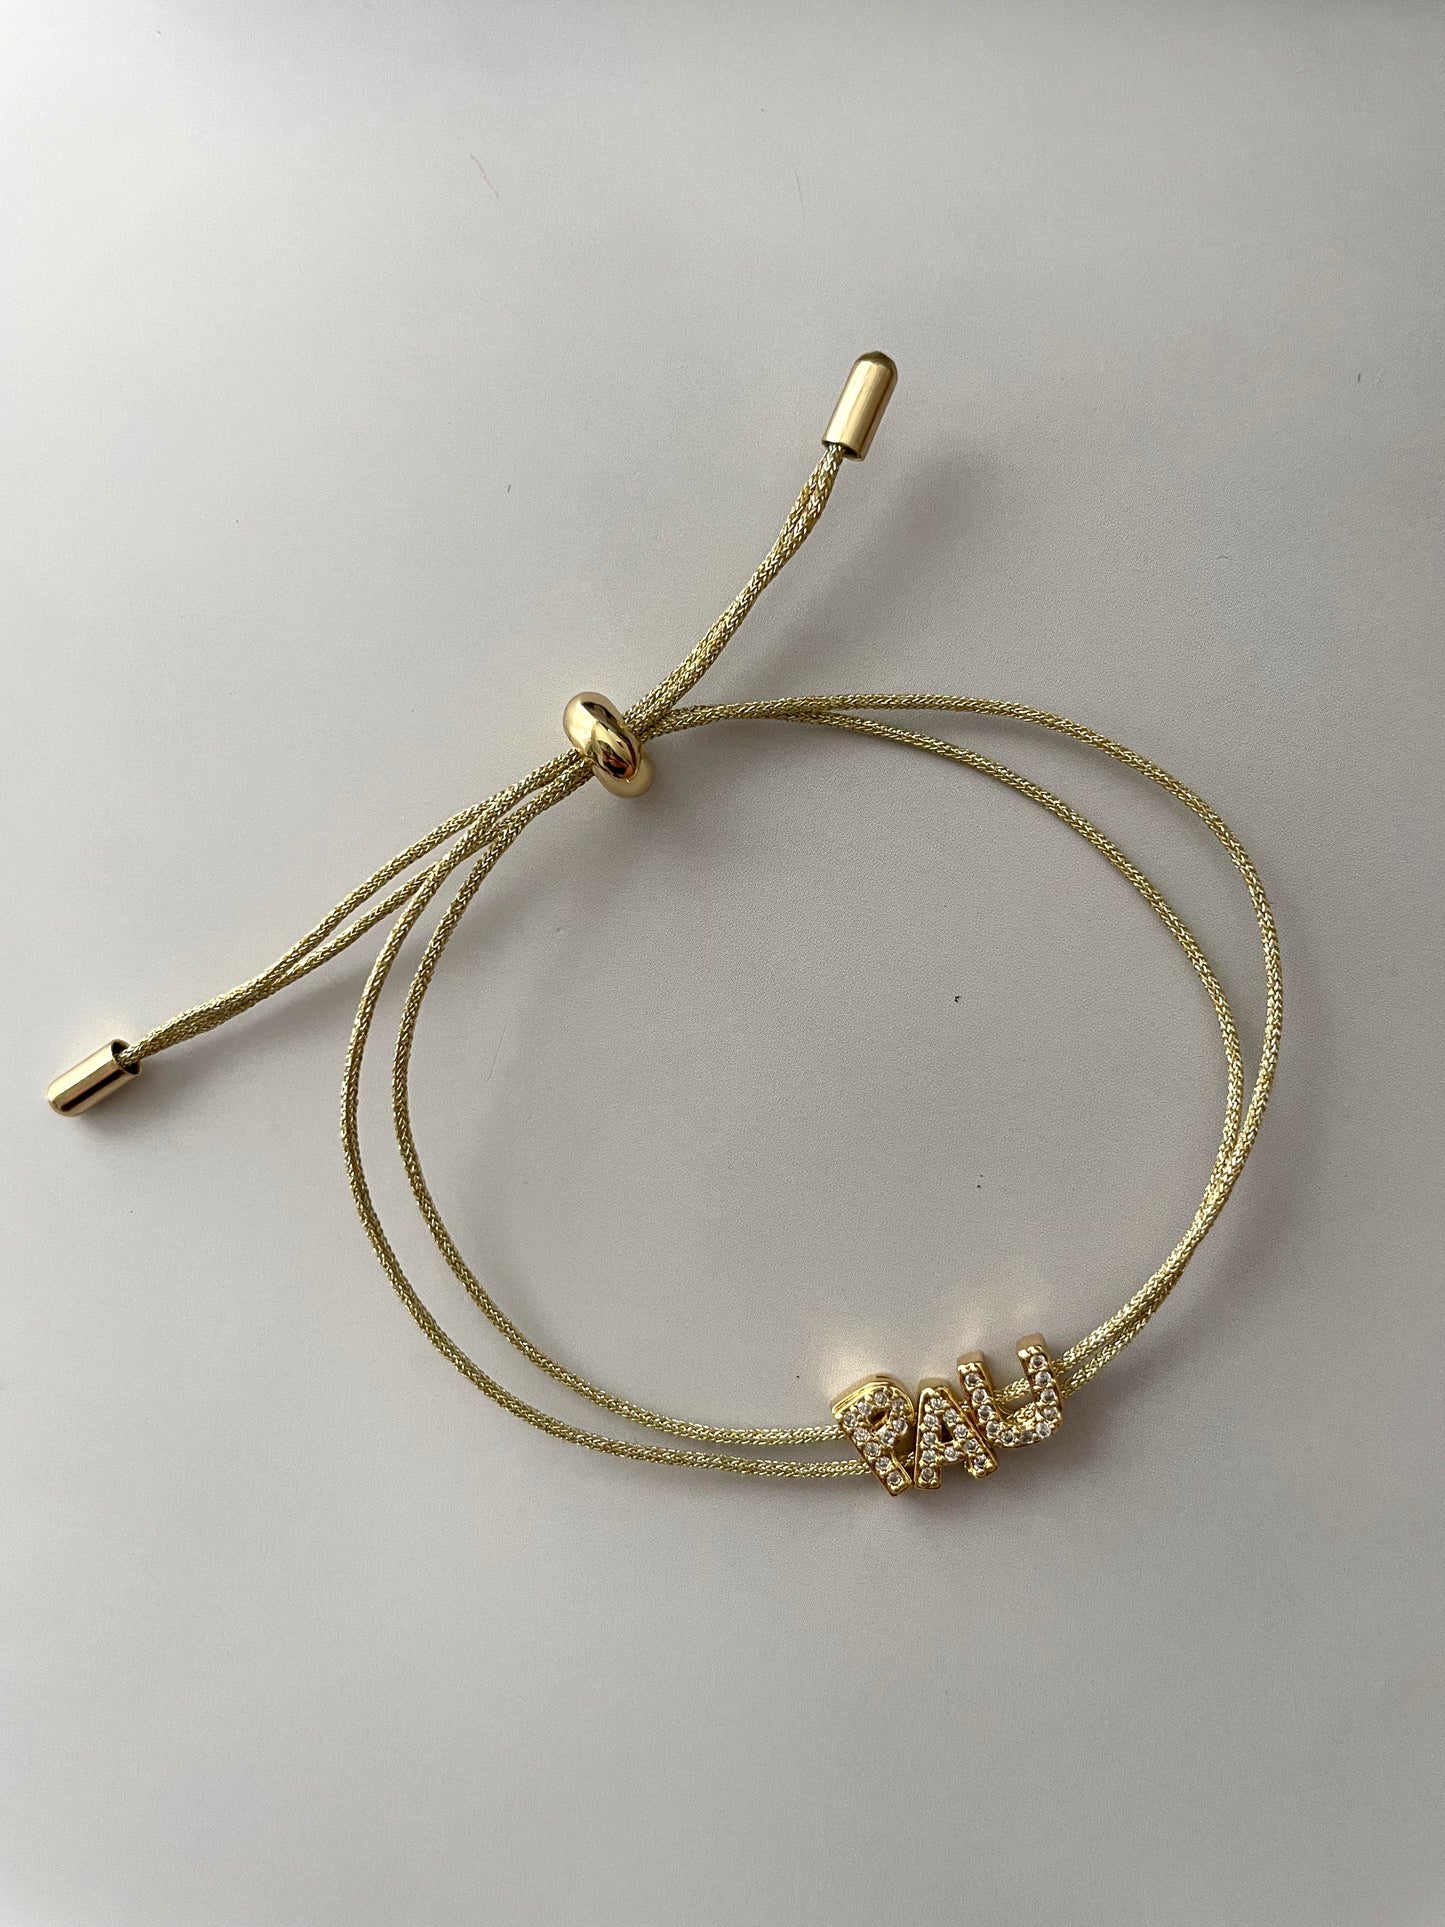 Custom cord bracelet